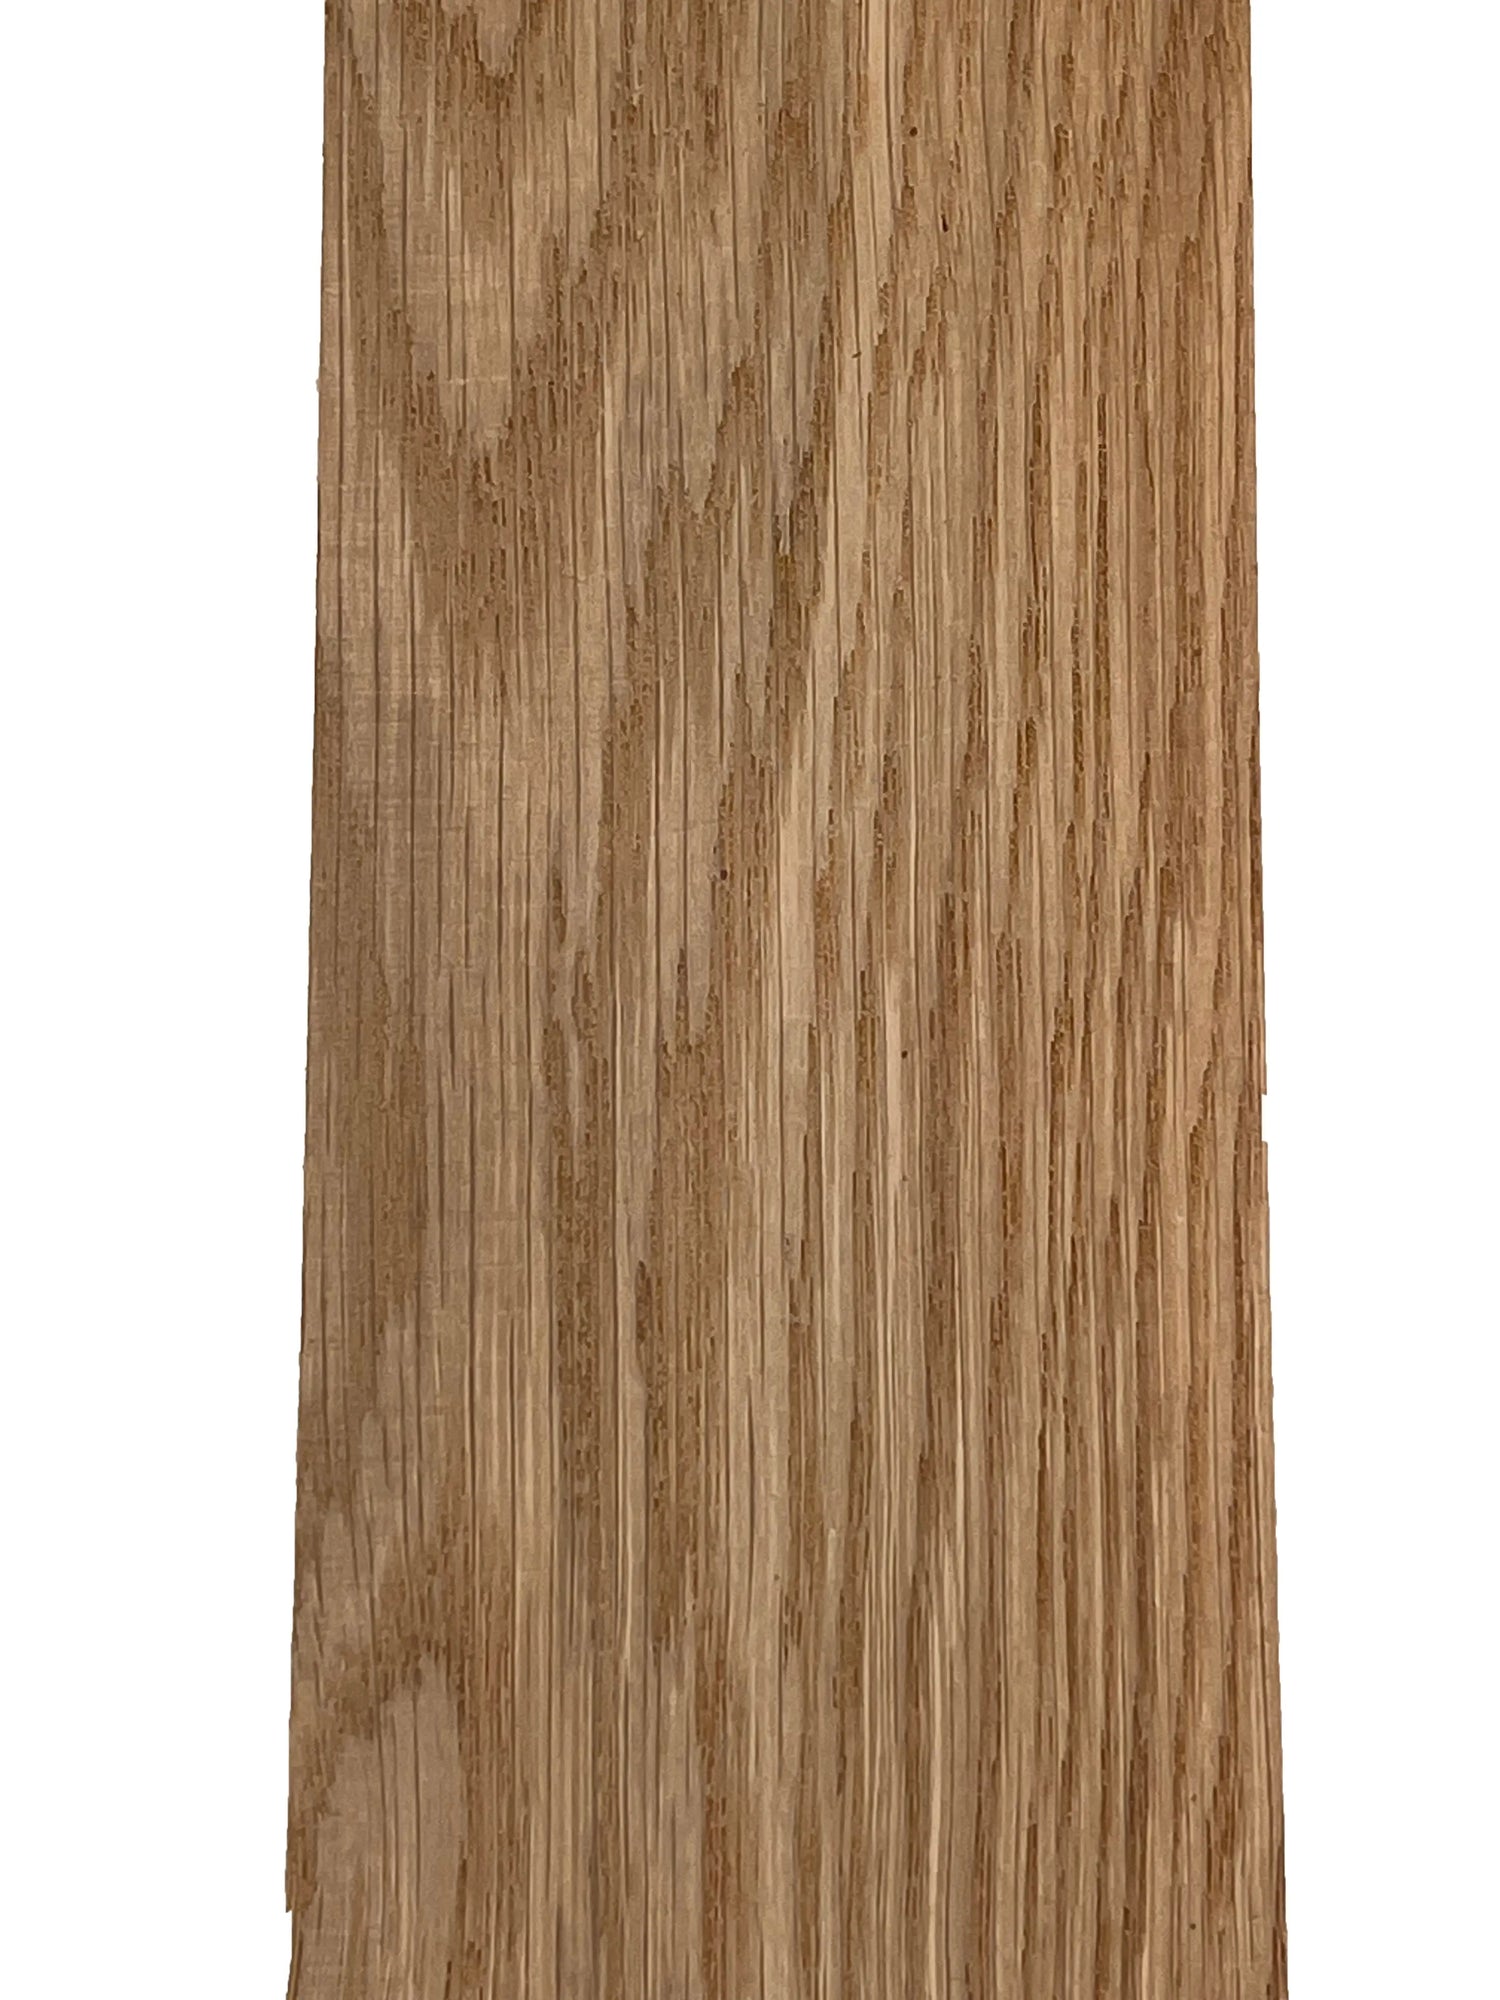 White Oak Thin Stock Lumber Boards Wood Crafts 1/2 x 6 x 48